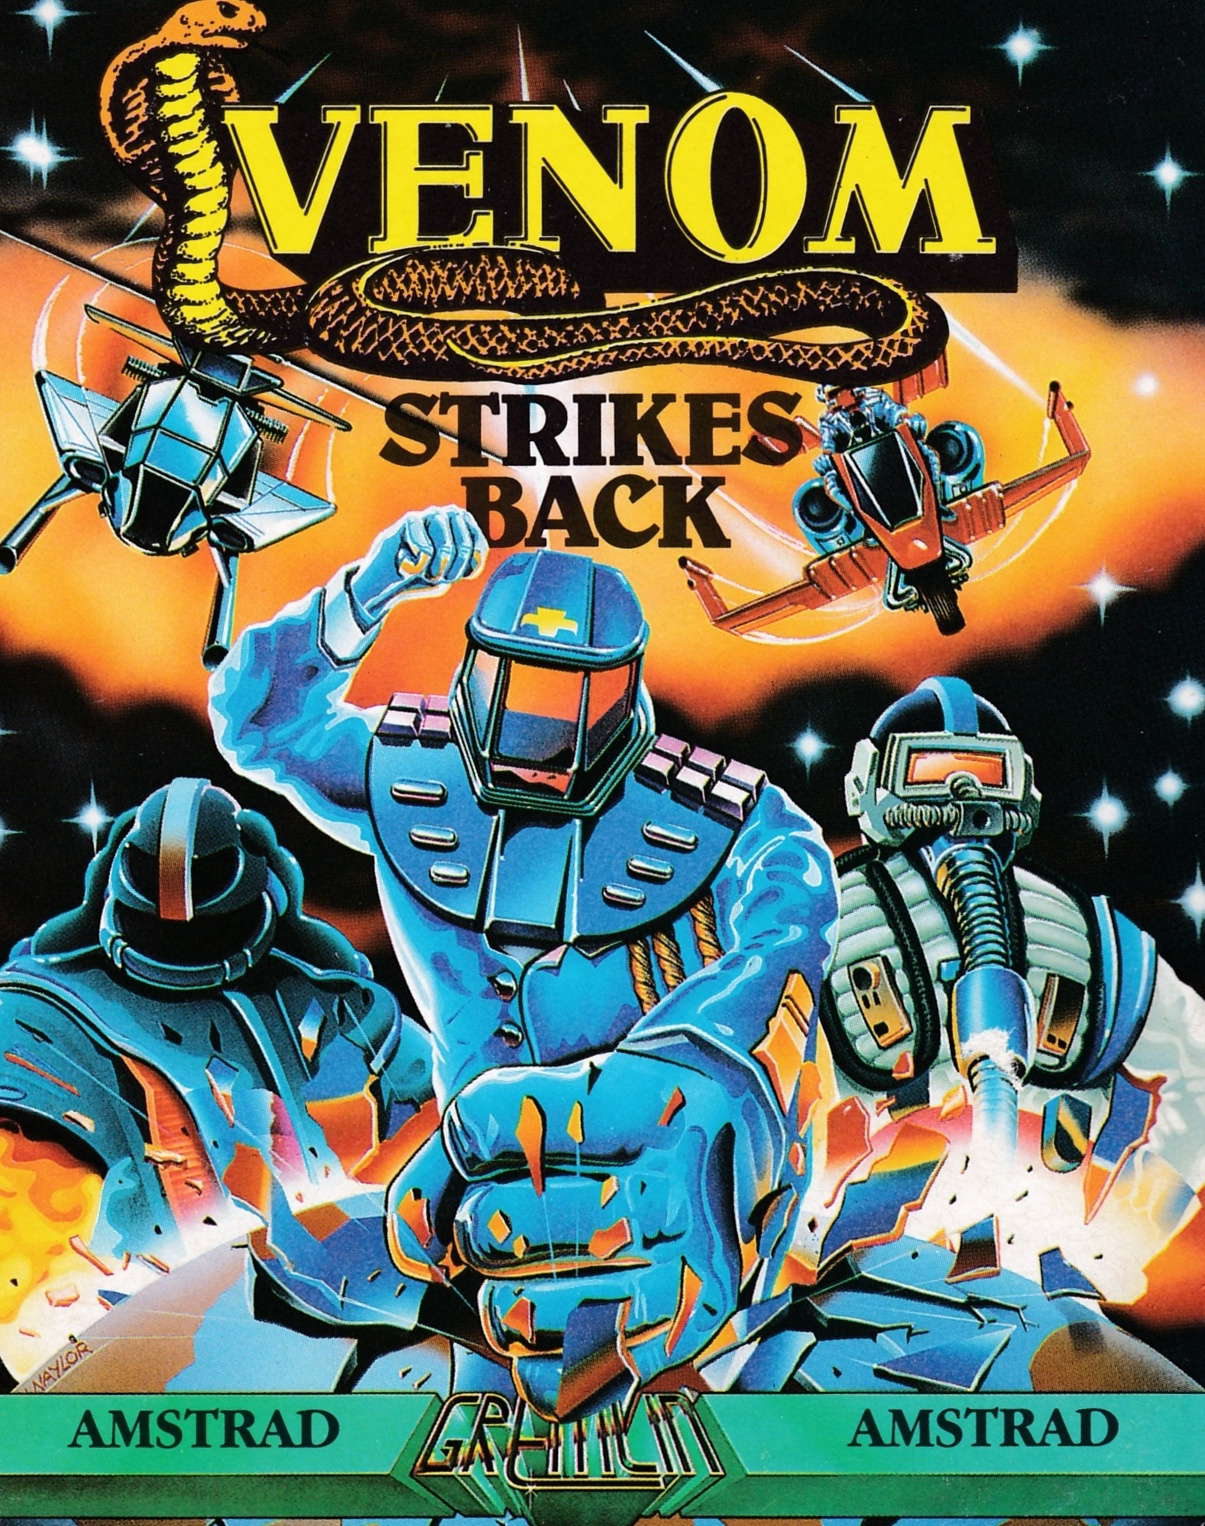 cover of the Amstrad CPC game Venom Strikes Back  by GameBase CPC